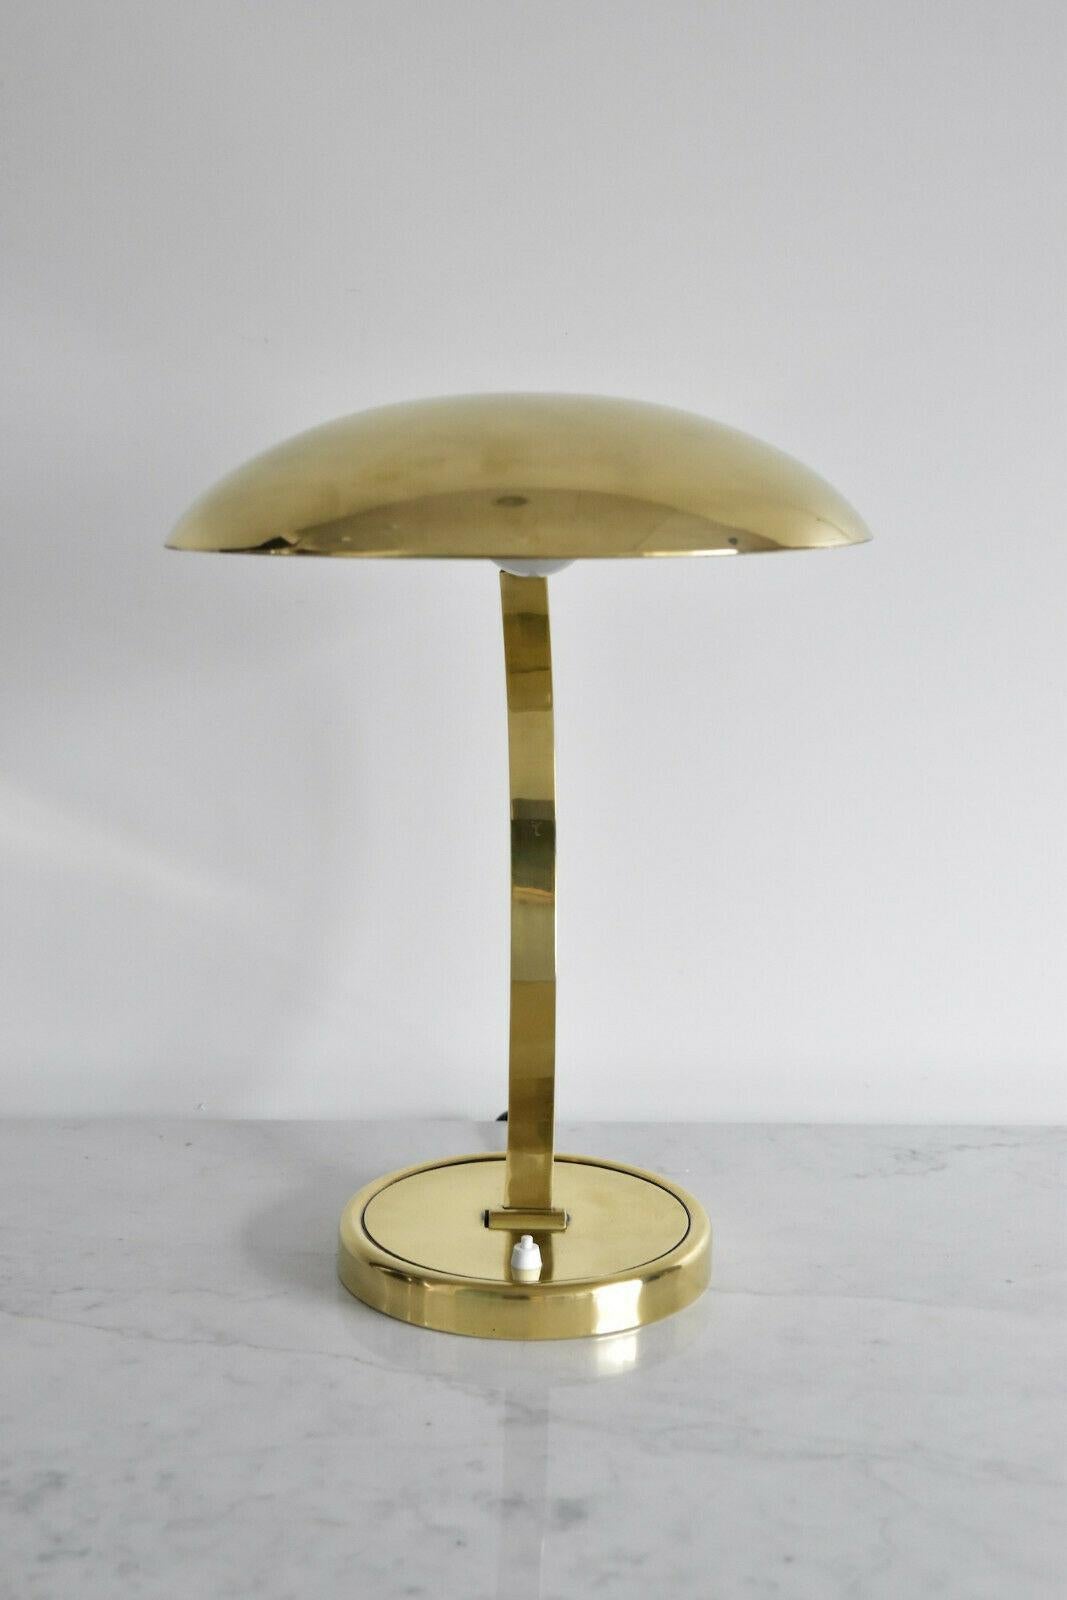 Christian Dell Table Lamp 6751 Desk Lamp by Kaiser Idell Bauhaus, Germany 1